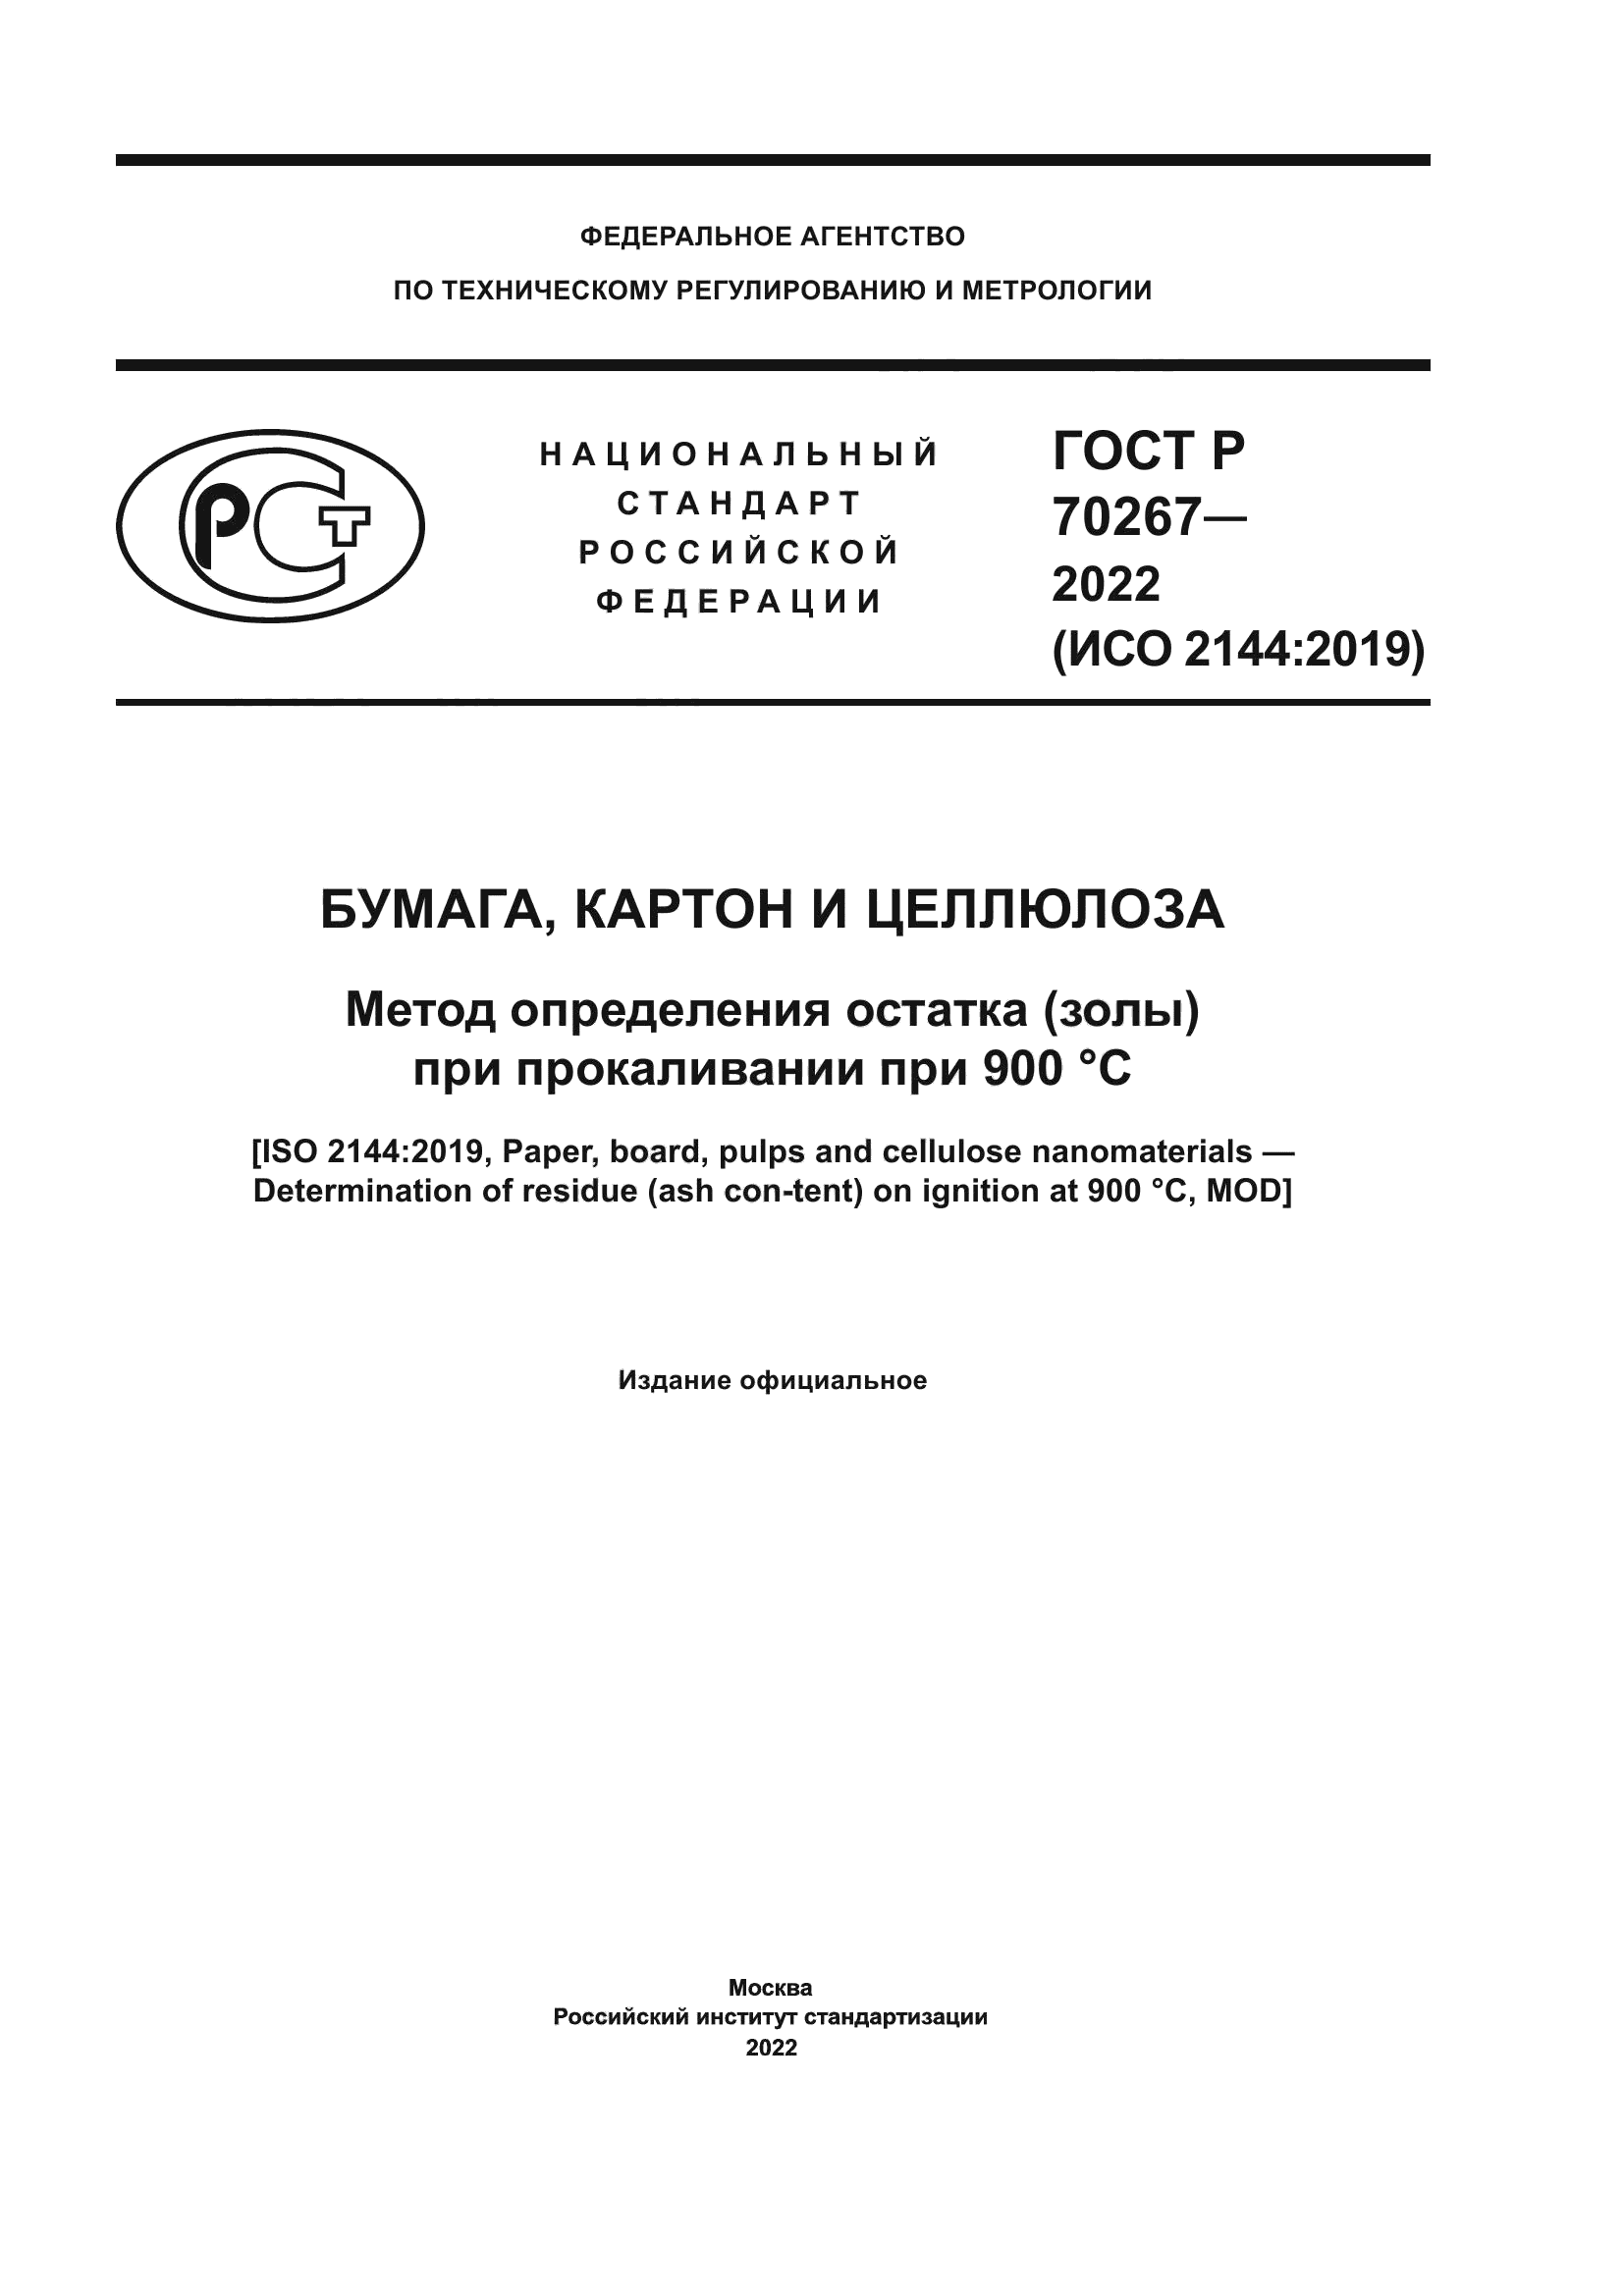 ГОСТ Р 70267-2022